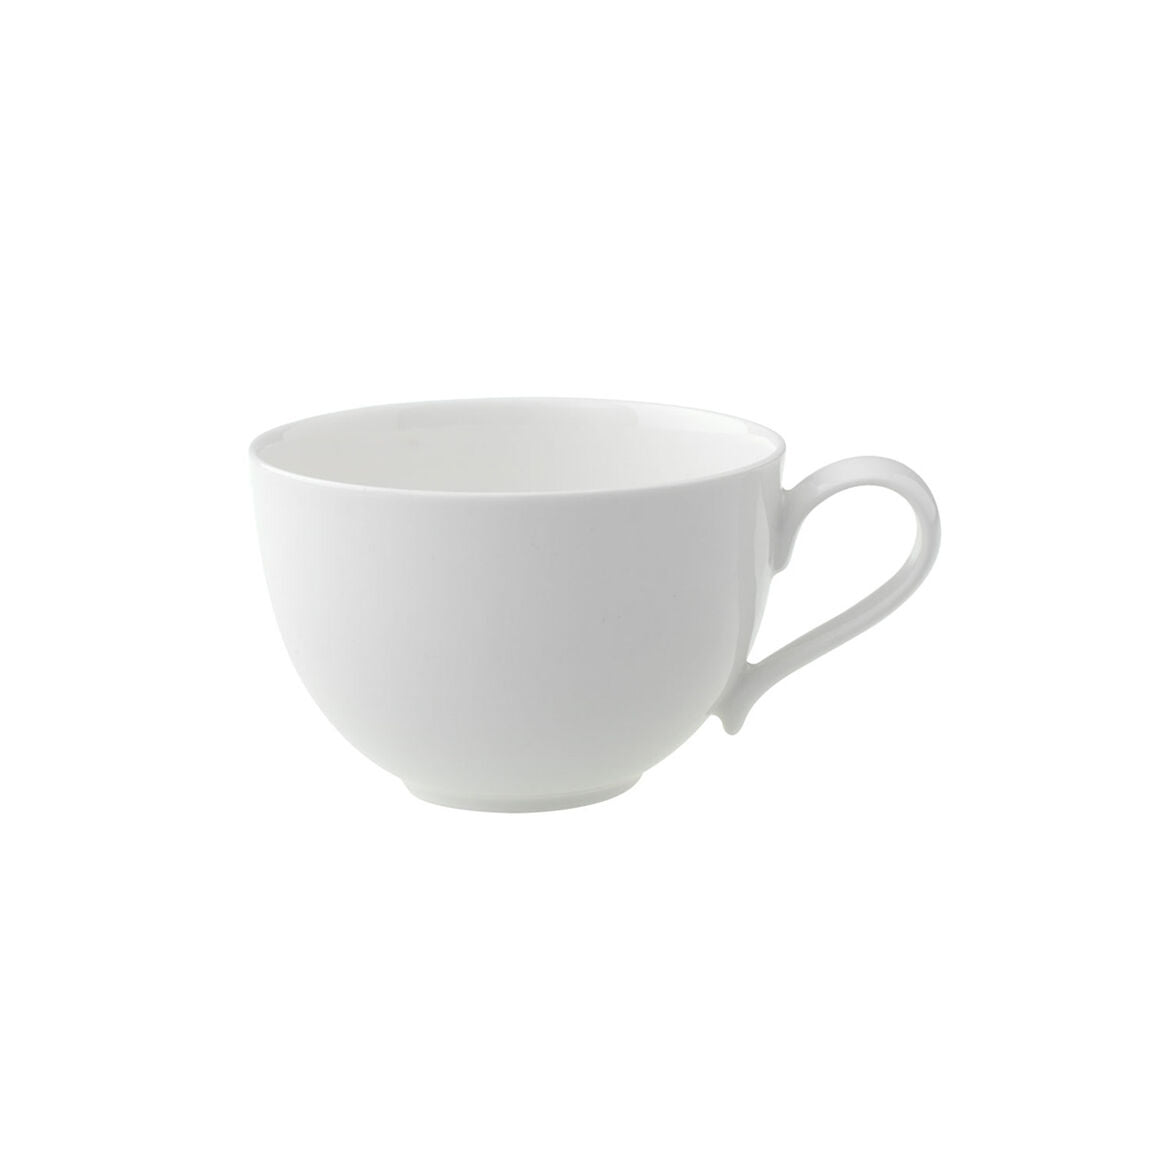 Villeroy & Boch New Cottage Basic Tea Cup, 8.25oz